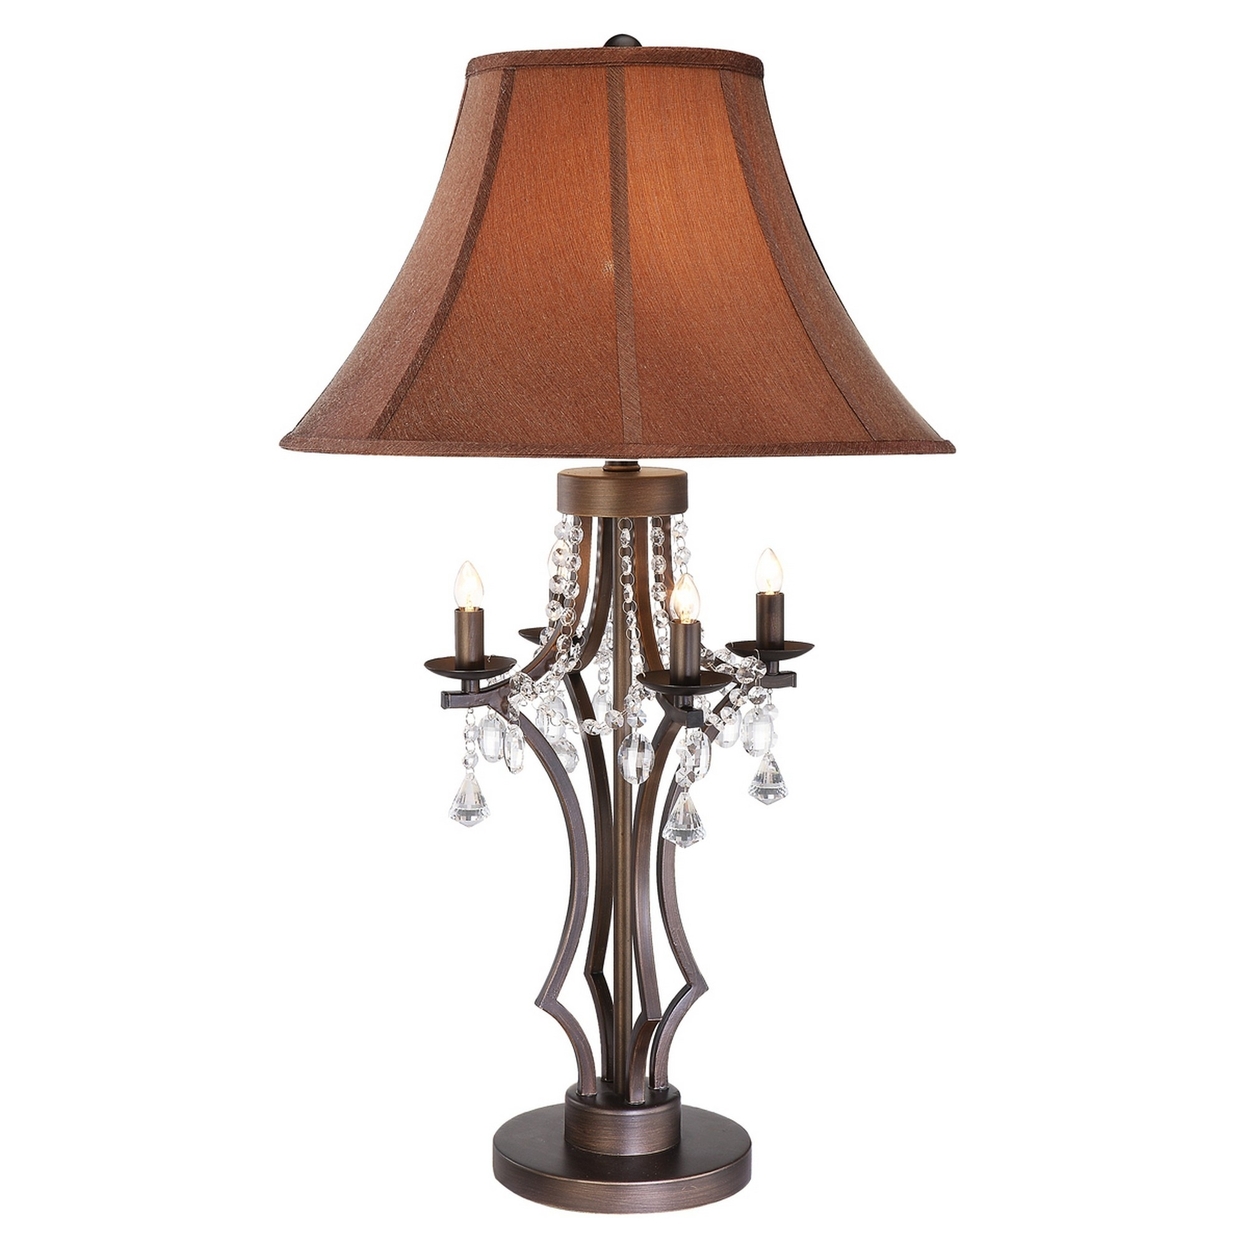 35 Inch Table Lamp, Empire Fabric Shade, Crystal, Antique Bronze Base -Saltoro Sherpi